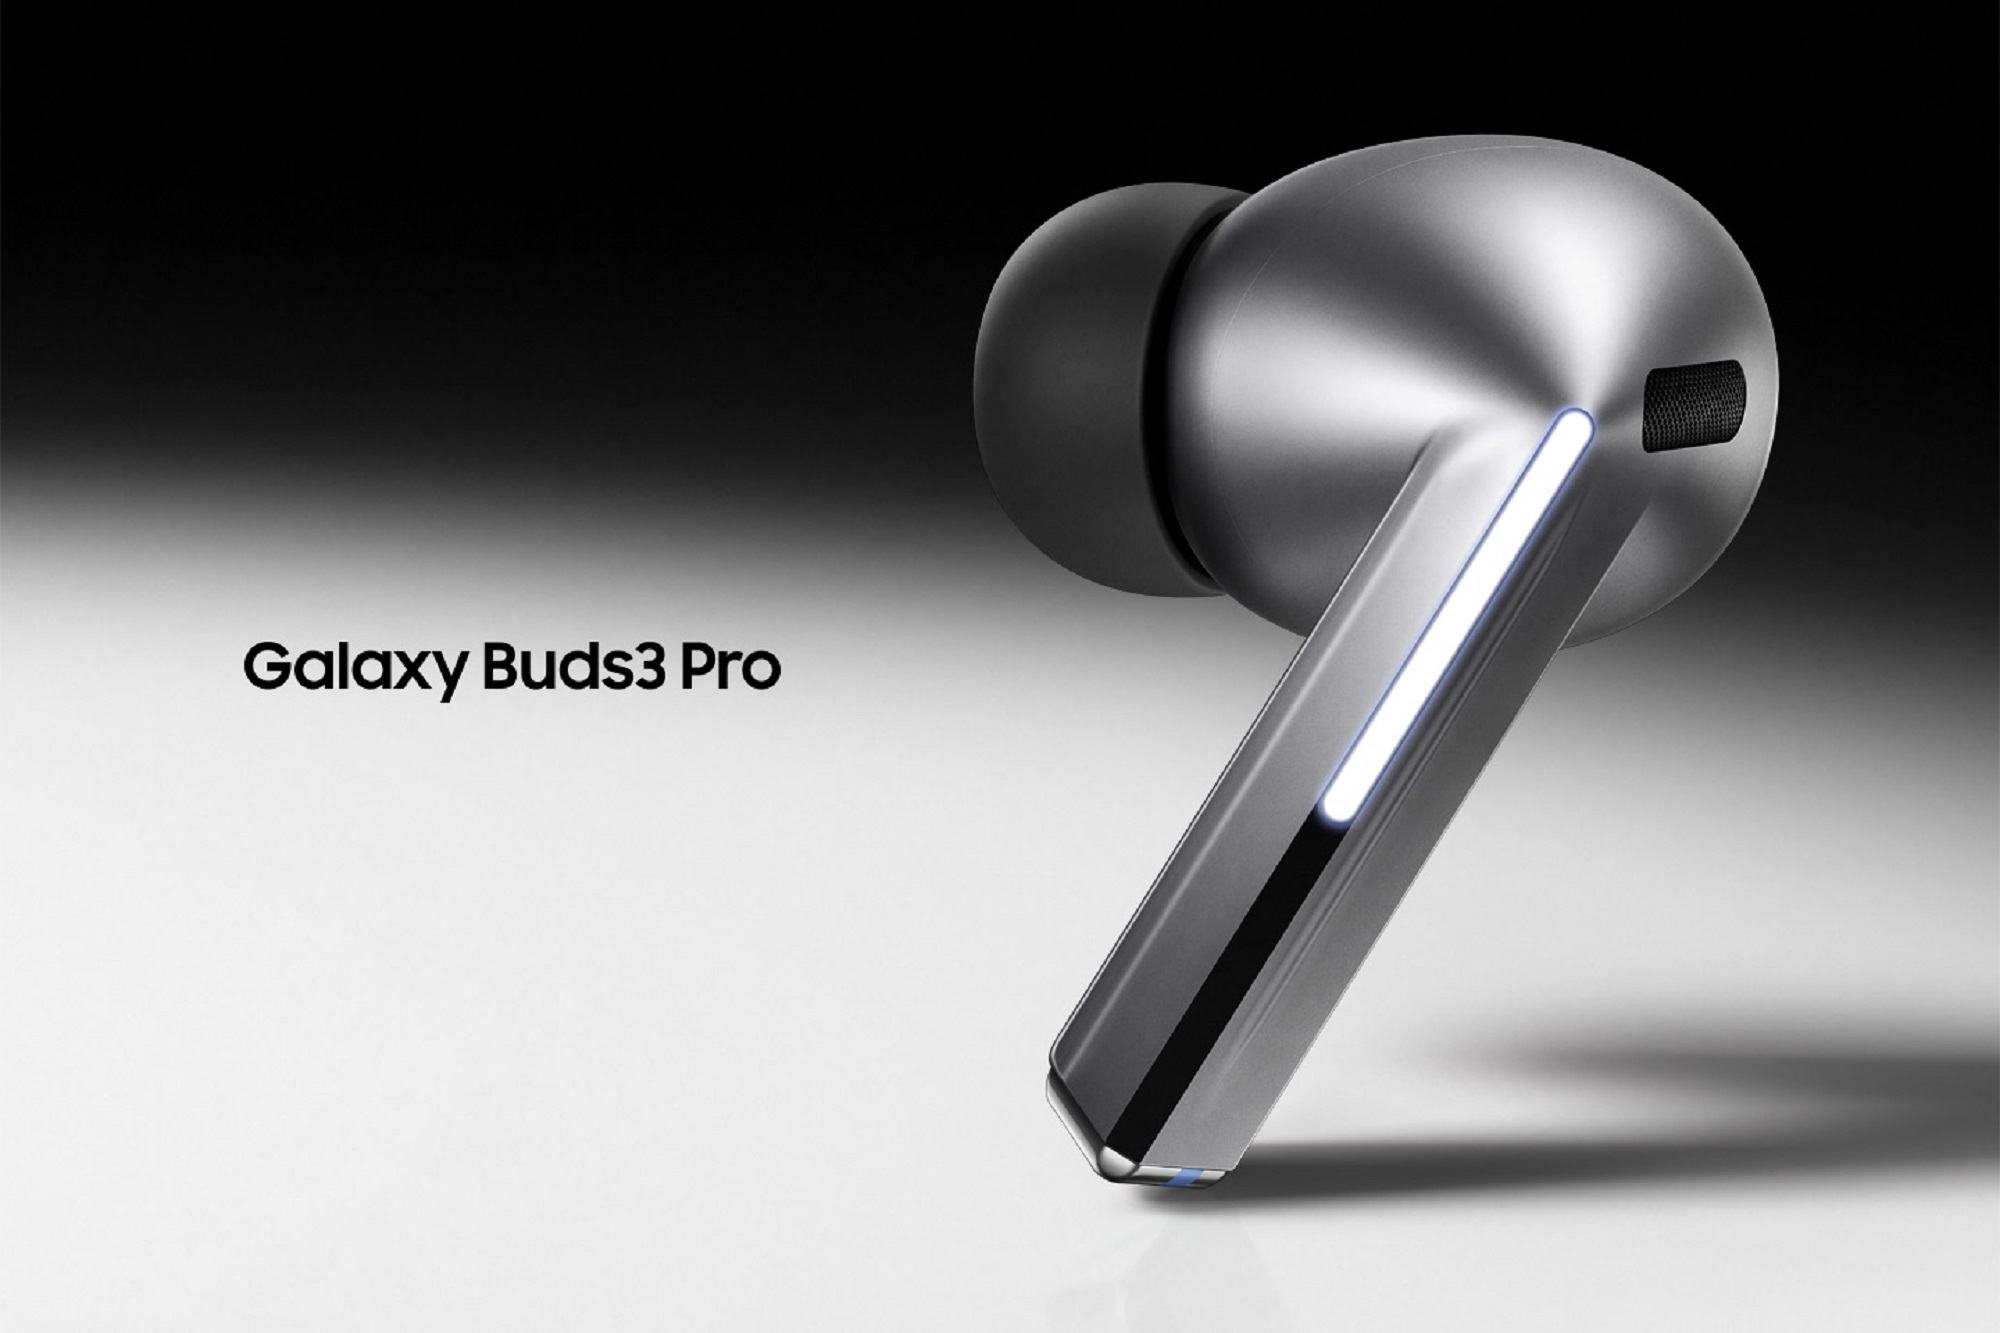 Samsung pausa envios dos Galaxy Buds 3 Pro; saiba o motivo